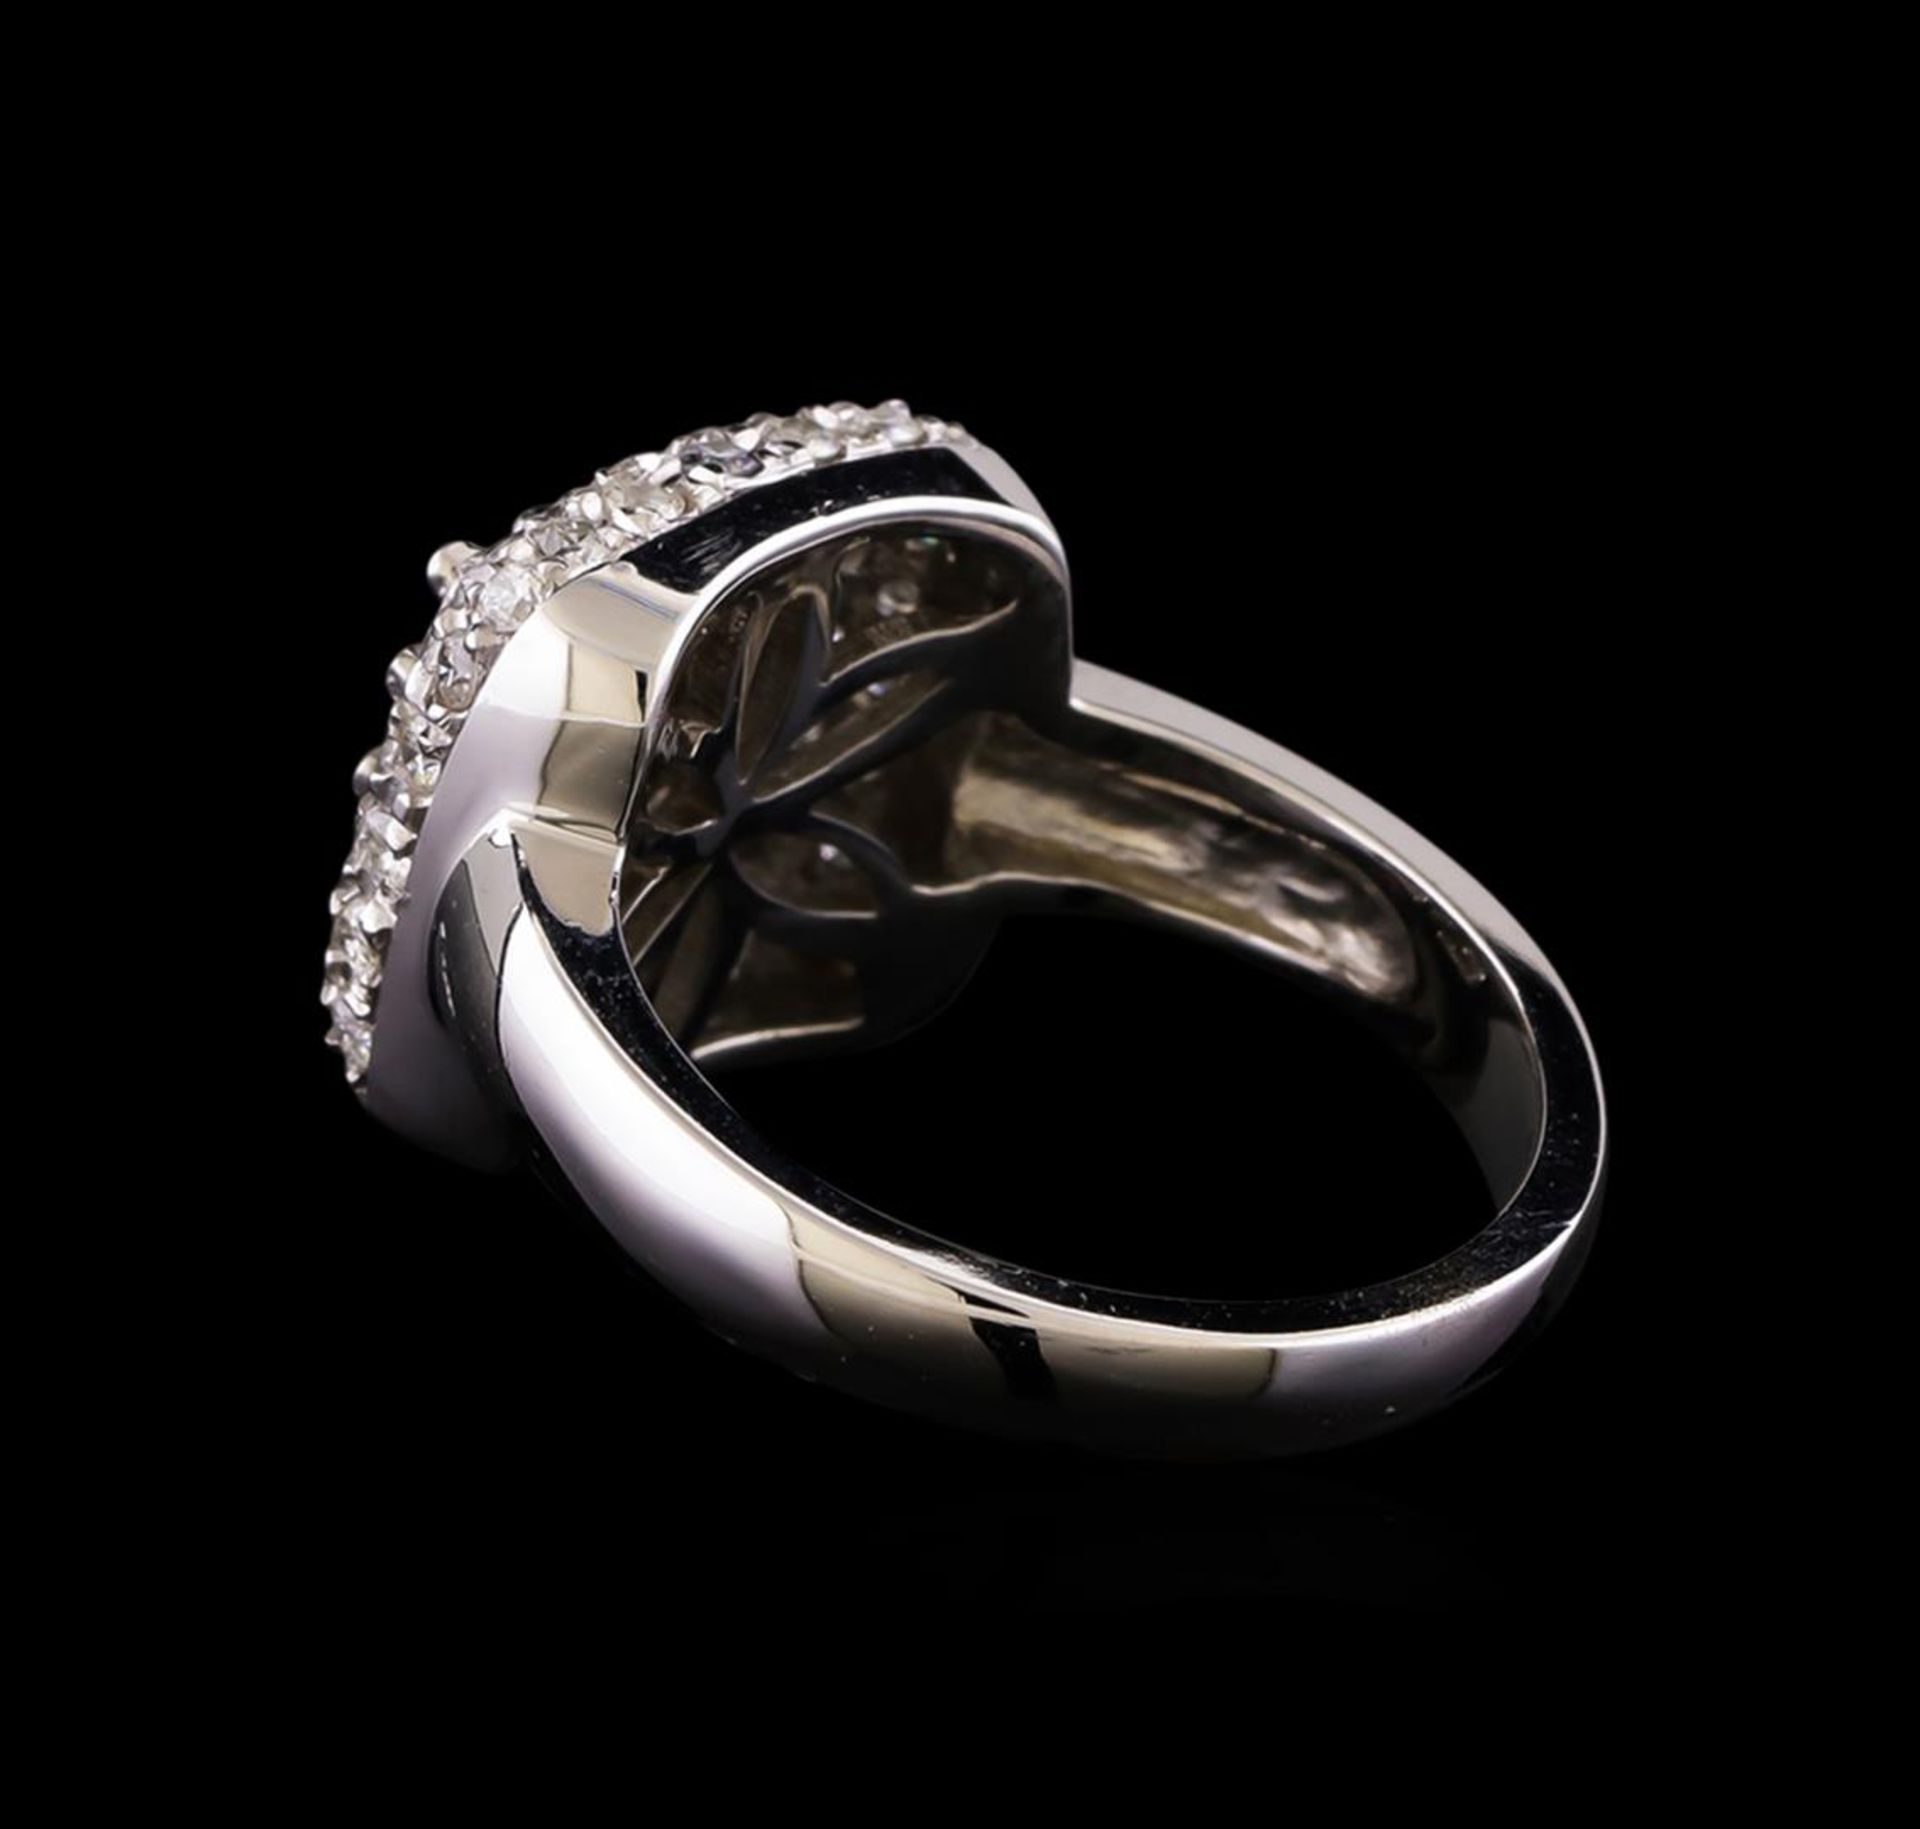 14KT White Gold 1.55 ctw Diamond Ring - Image 3 of 5